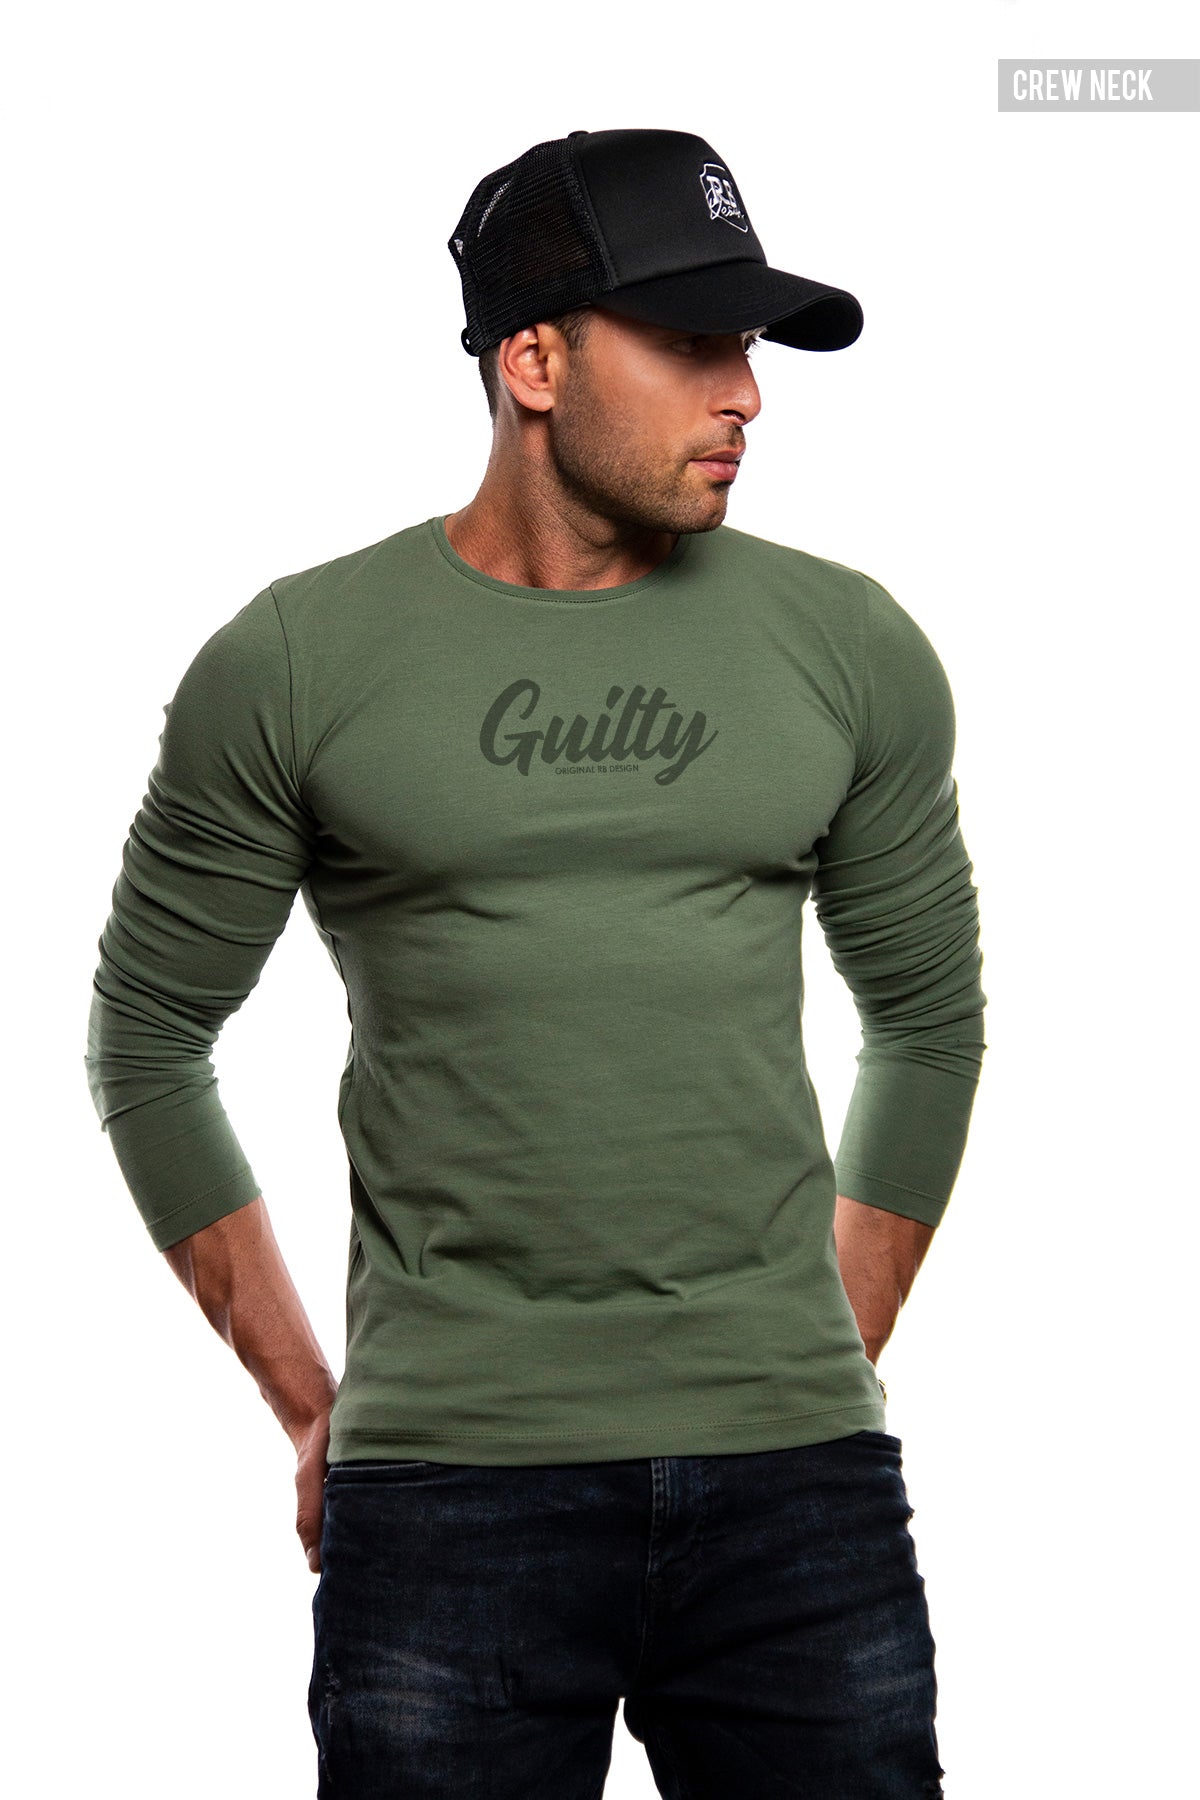 Mens Long Sleeve T-shirt "Guilty" MD965